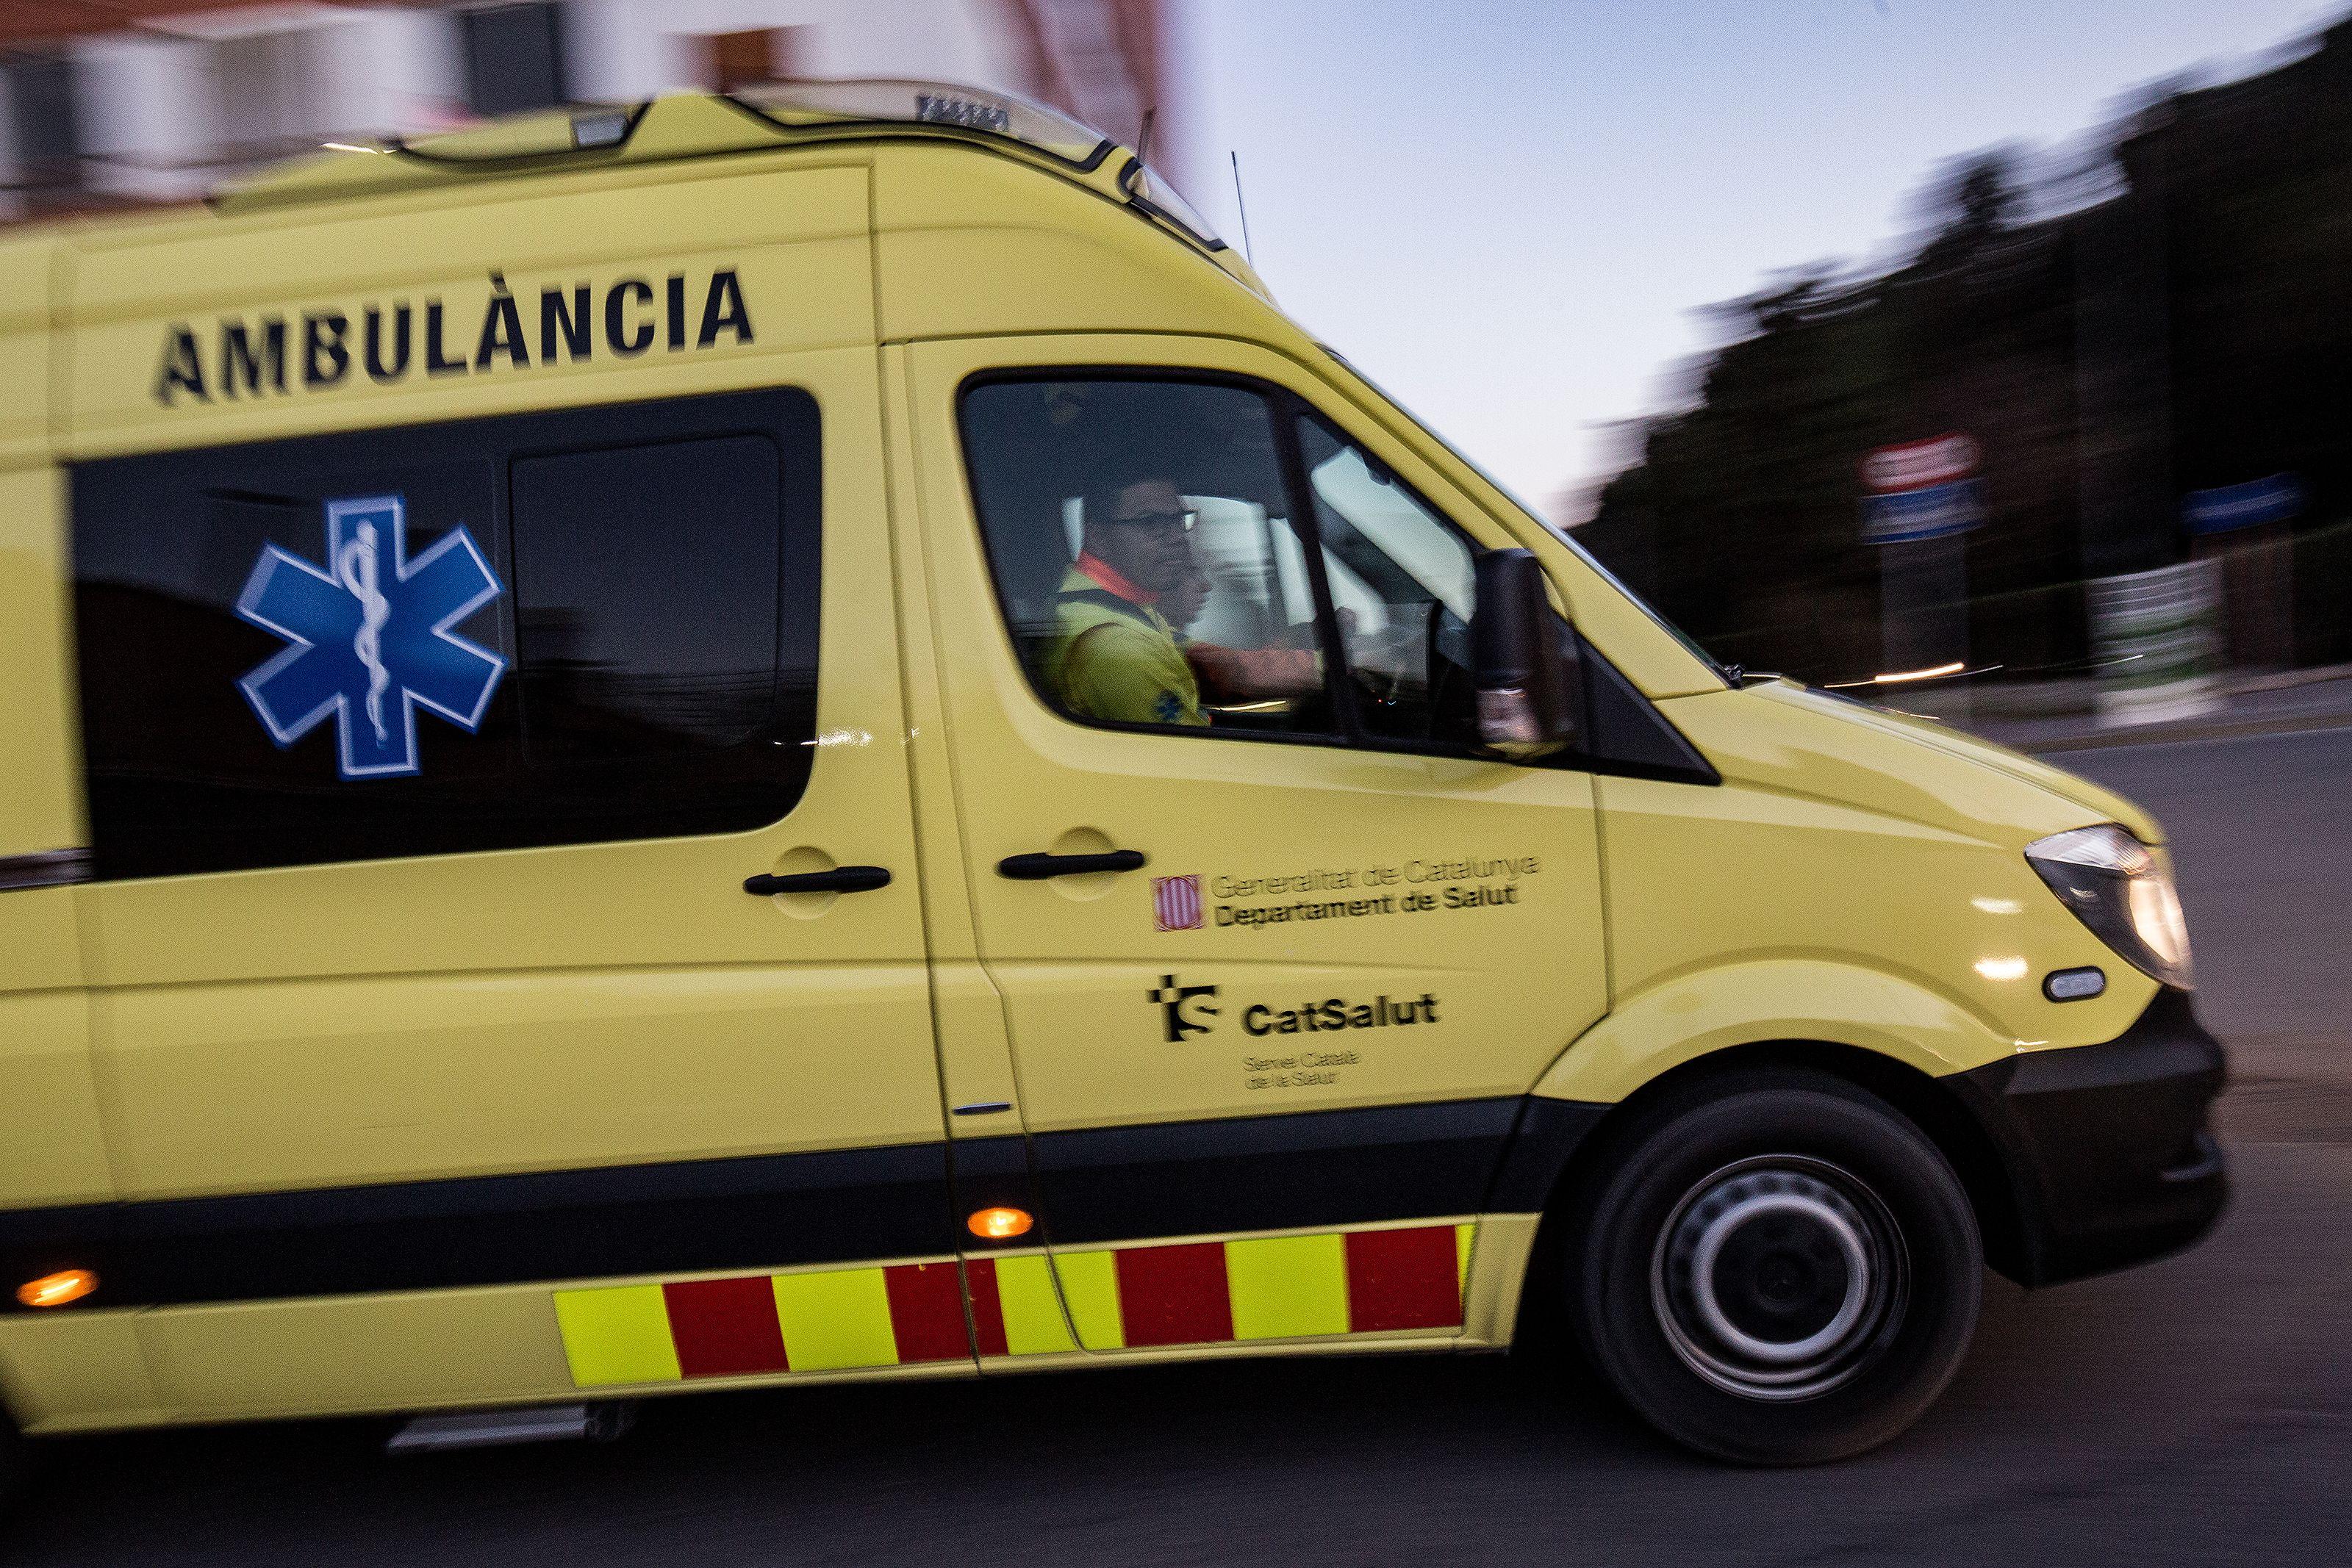 Ambulància SEM / Carles Palacio